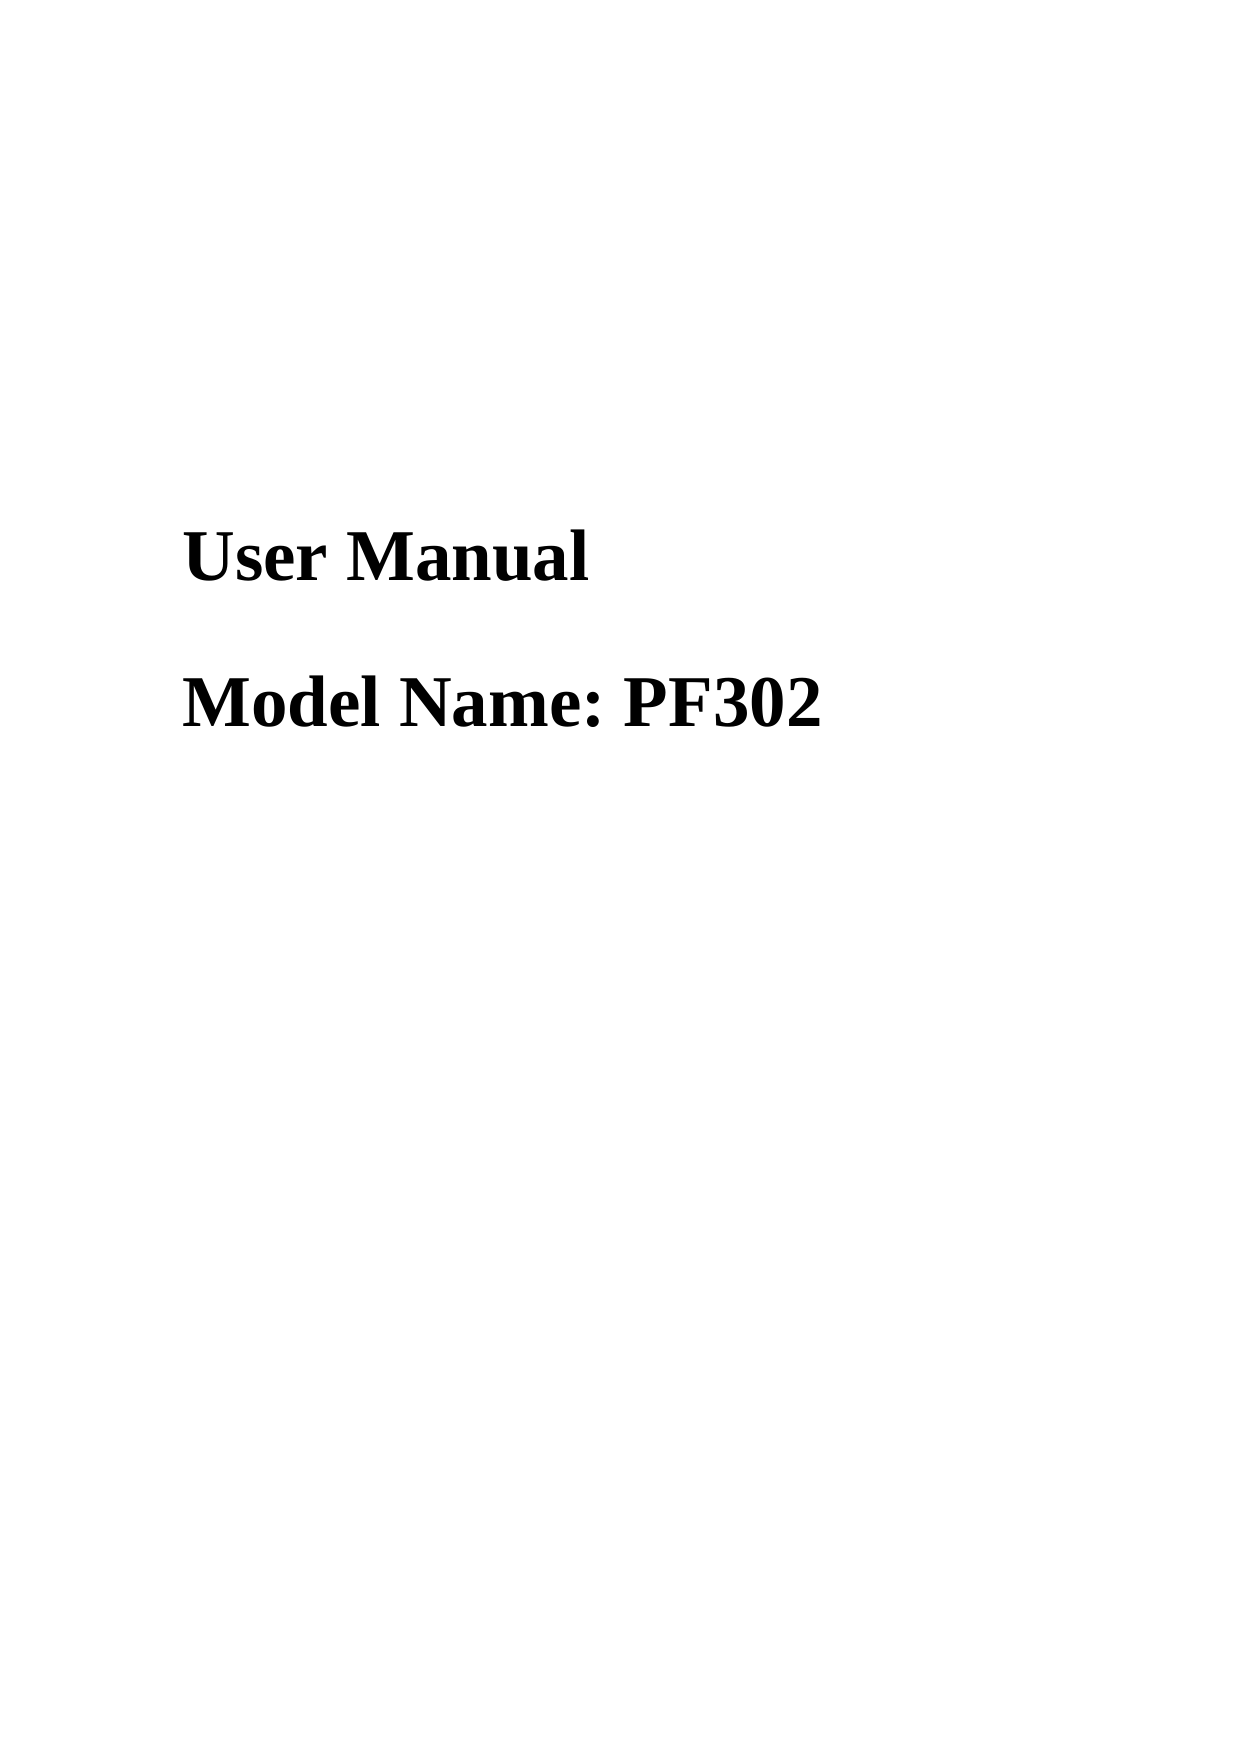   User Manual Model Name: PF302  